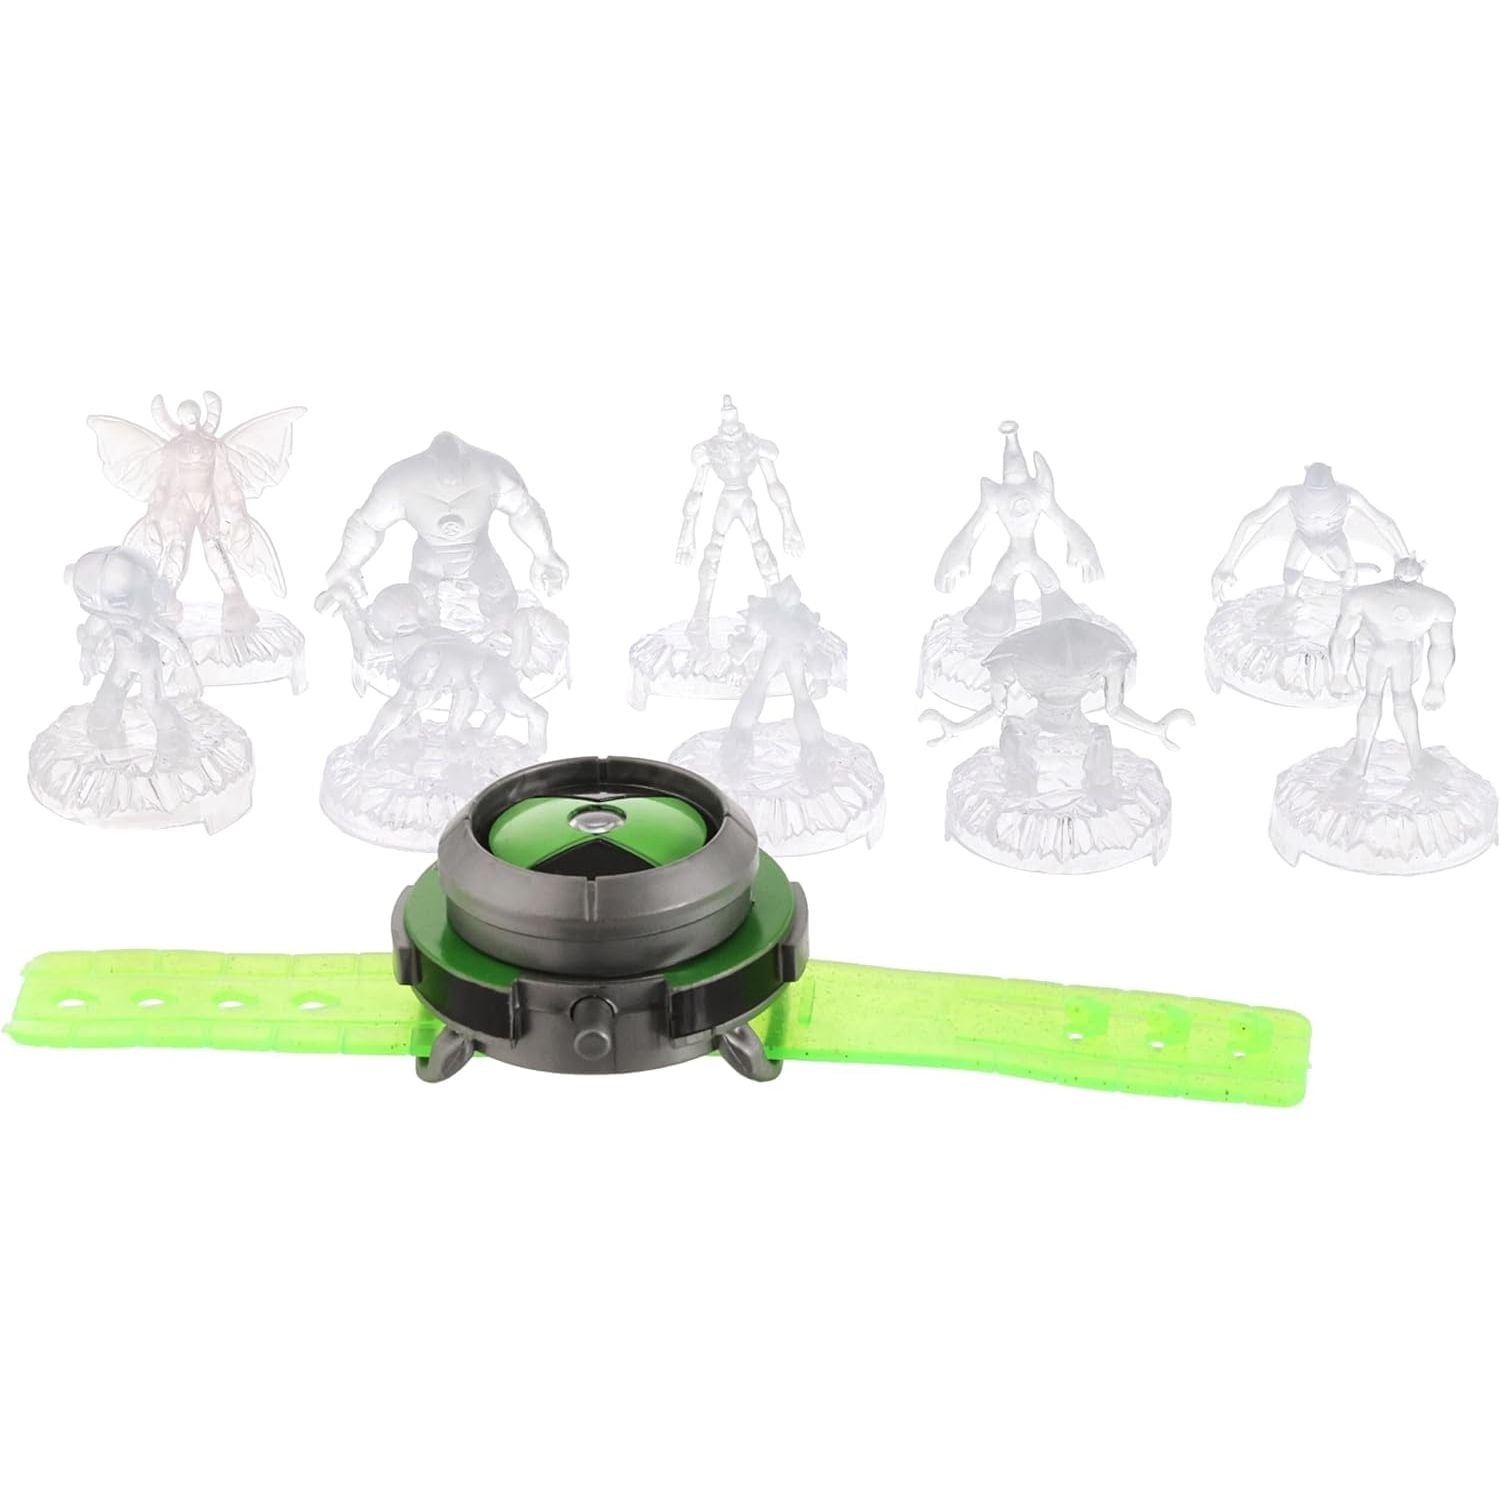 Ben 10 Ultimate Alien Watch Toy - Green